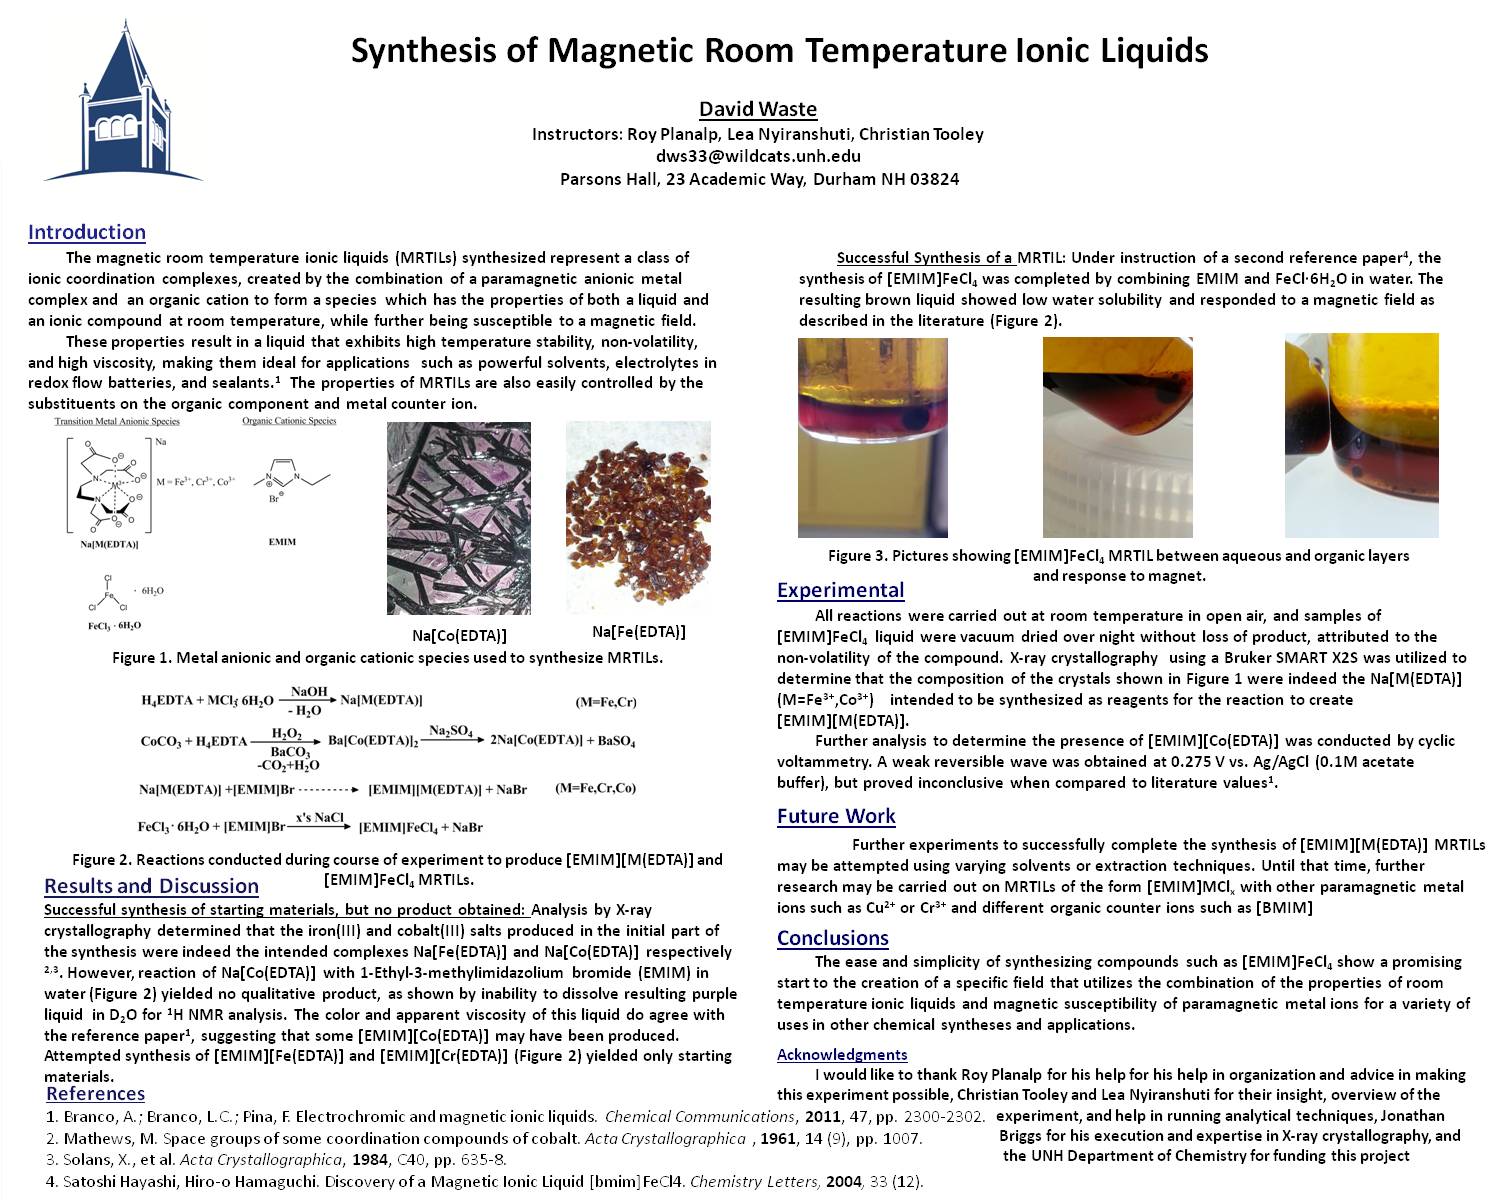 Magnetic Room Temperature Ionic Liquids by dws33